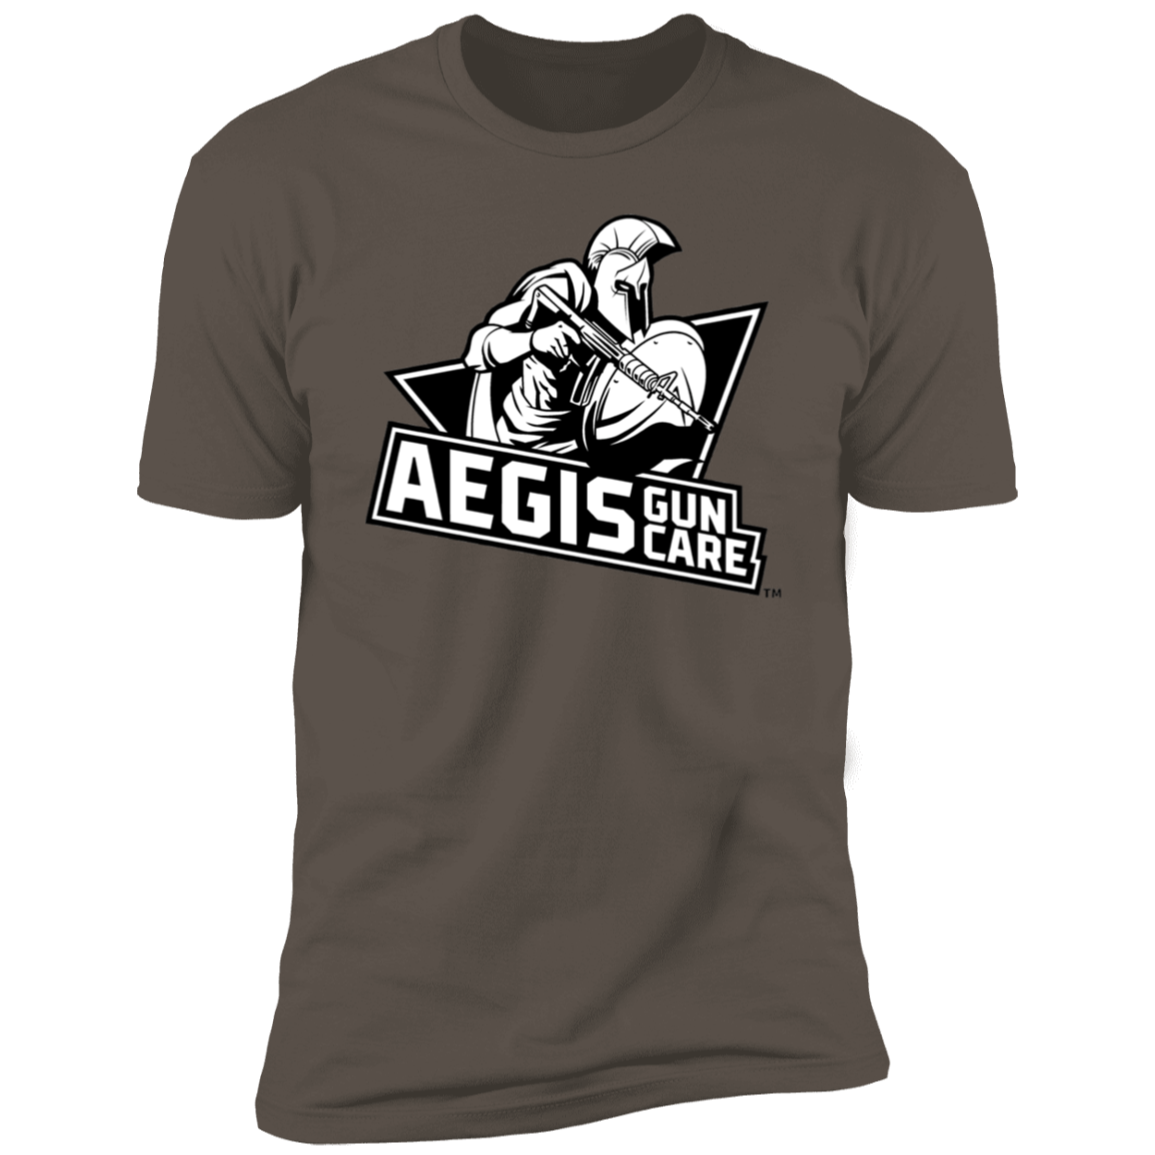 Aegis B&W Next level Short Sleeve T-Shirt